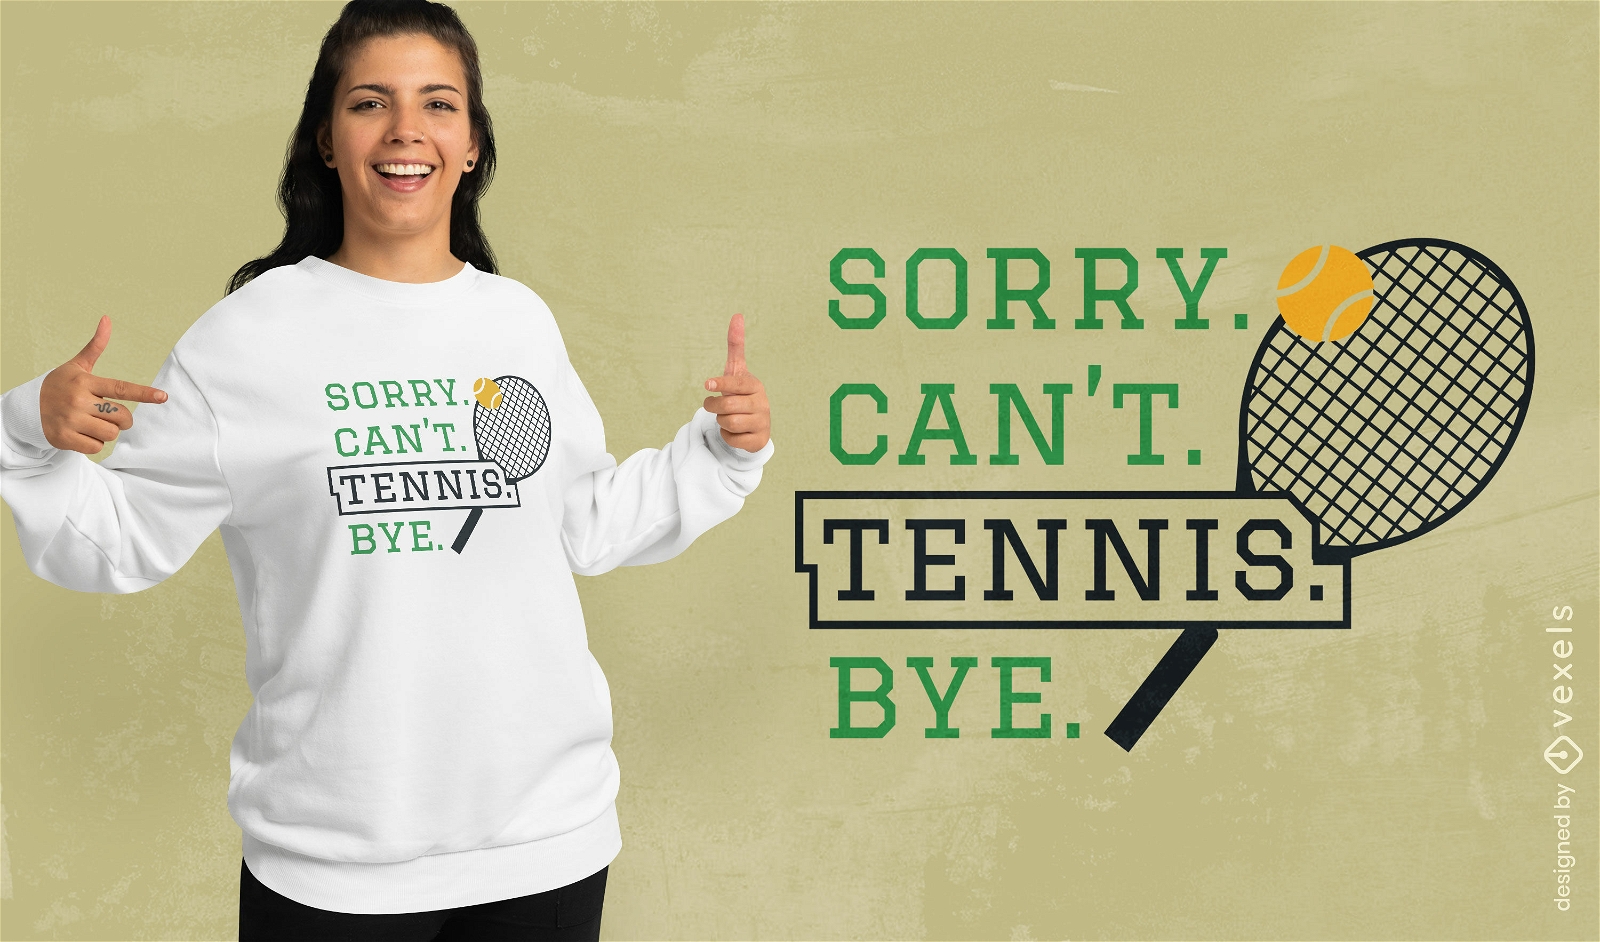 Humorvolles Tennis-Statement-T-Shirt-Design